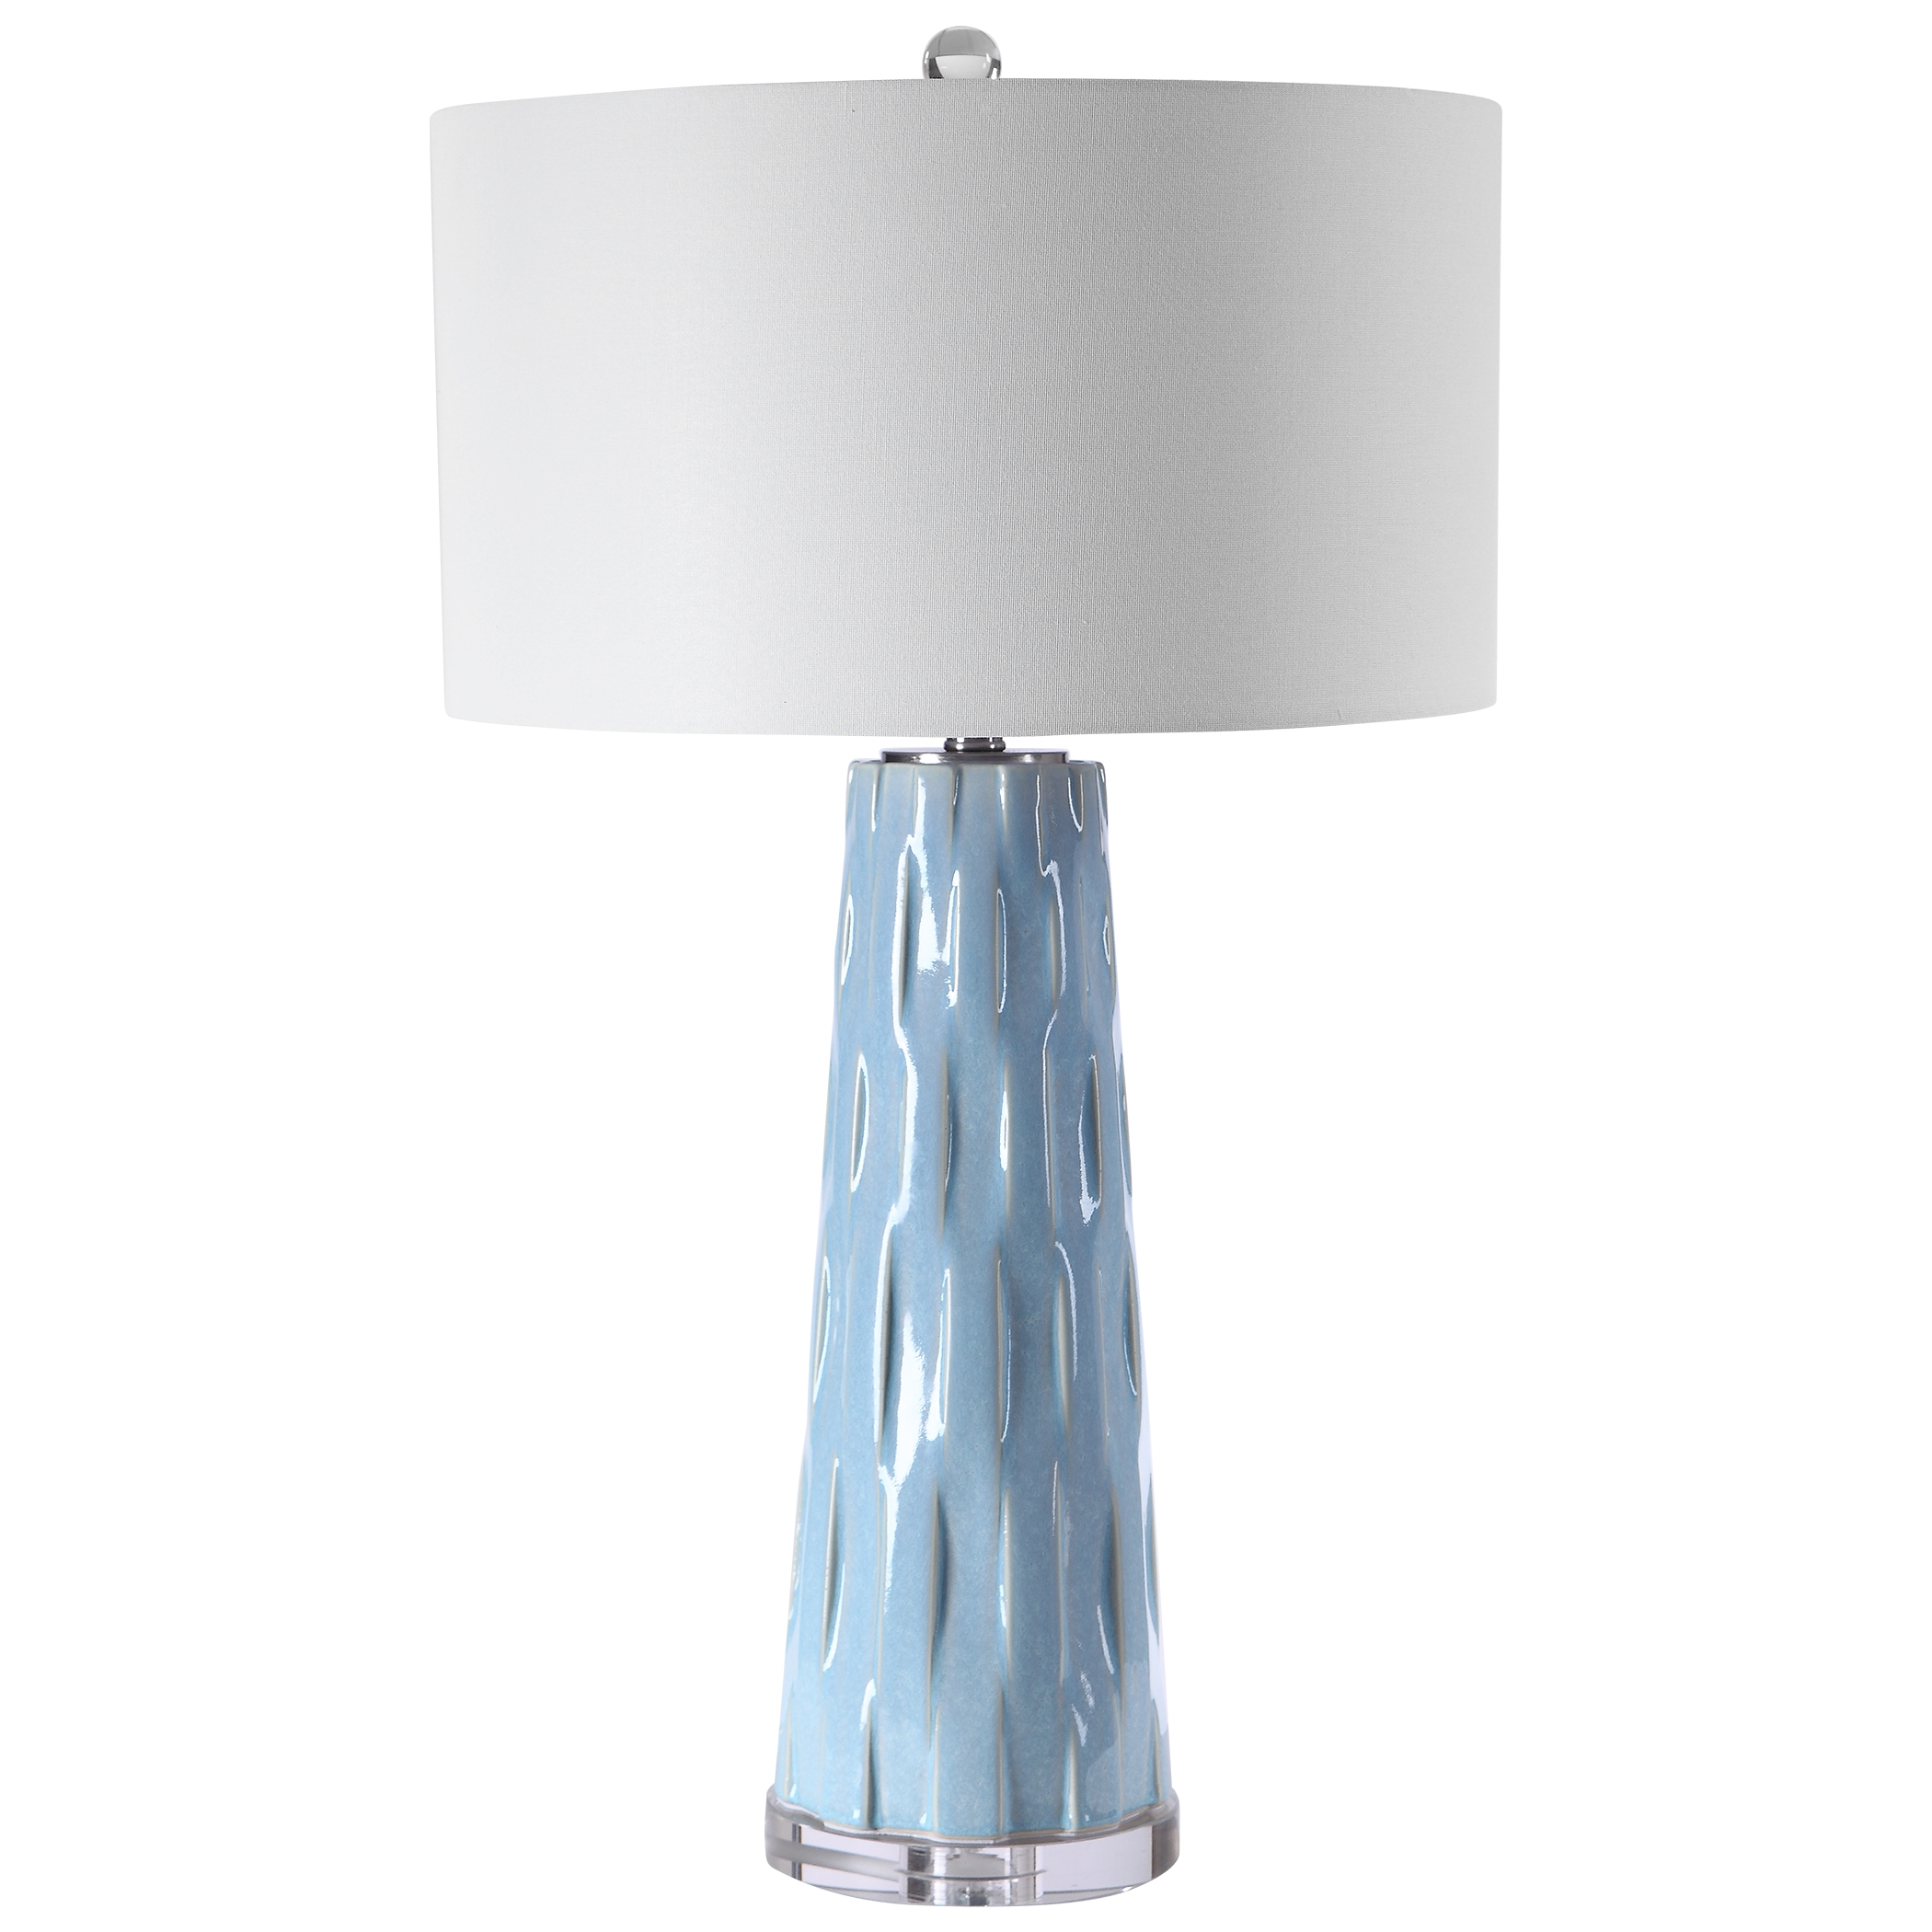 Brienne Light Blue Table Lamp - Image 6